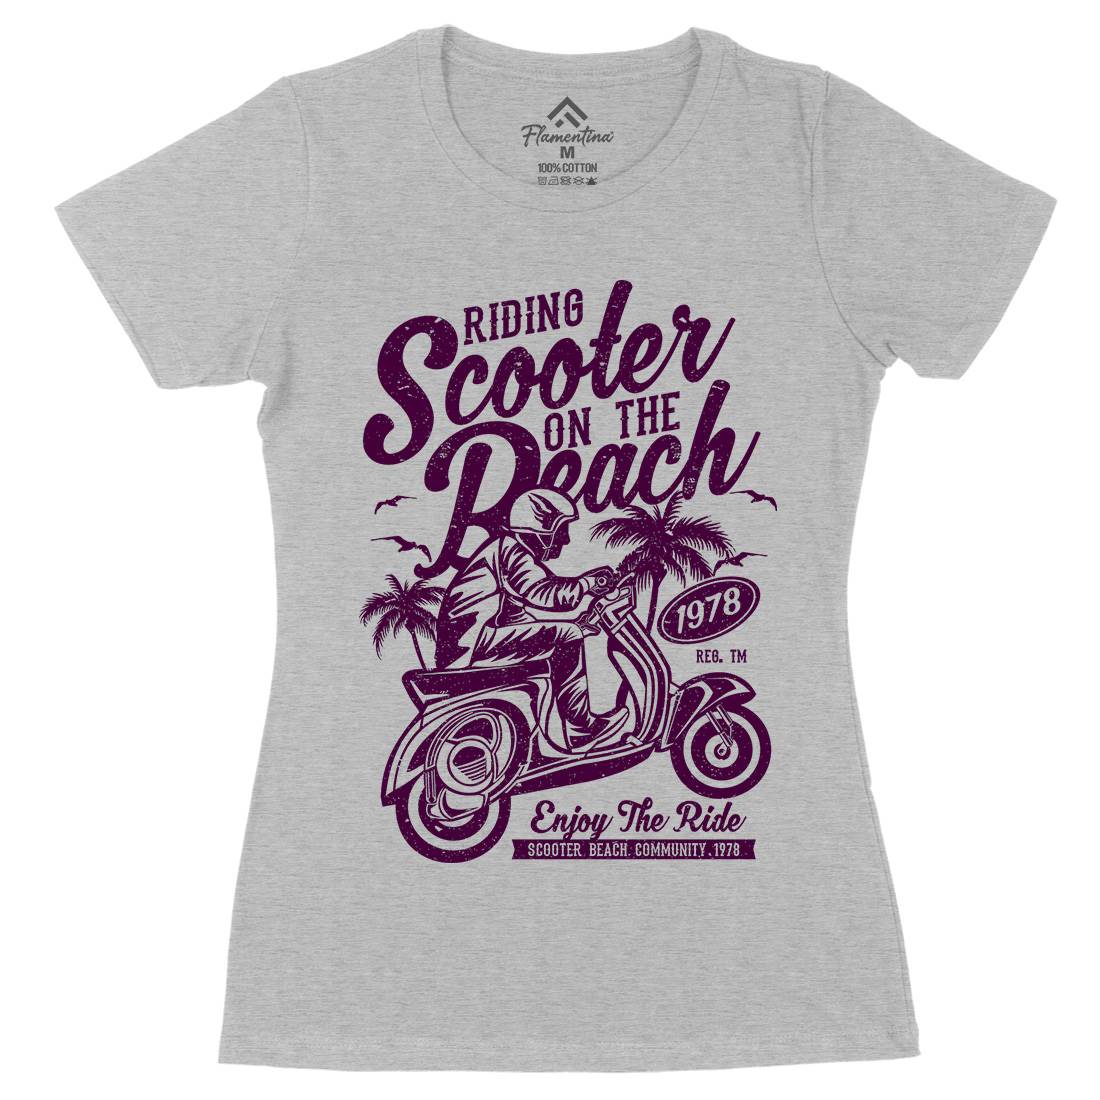 Scooter Beach Womens Organic Crew Neck T-Shirt Motorcycles A134